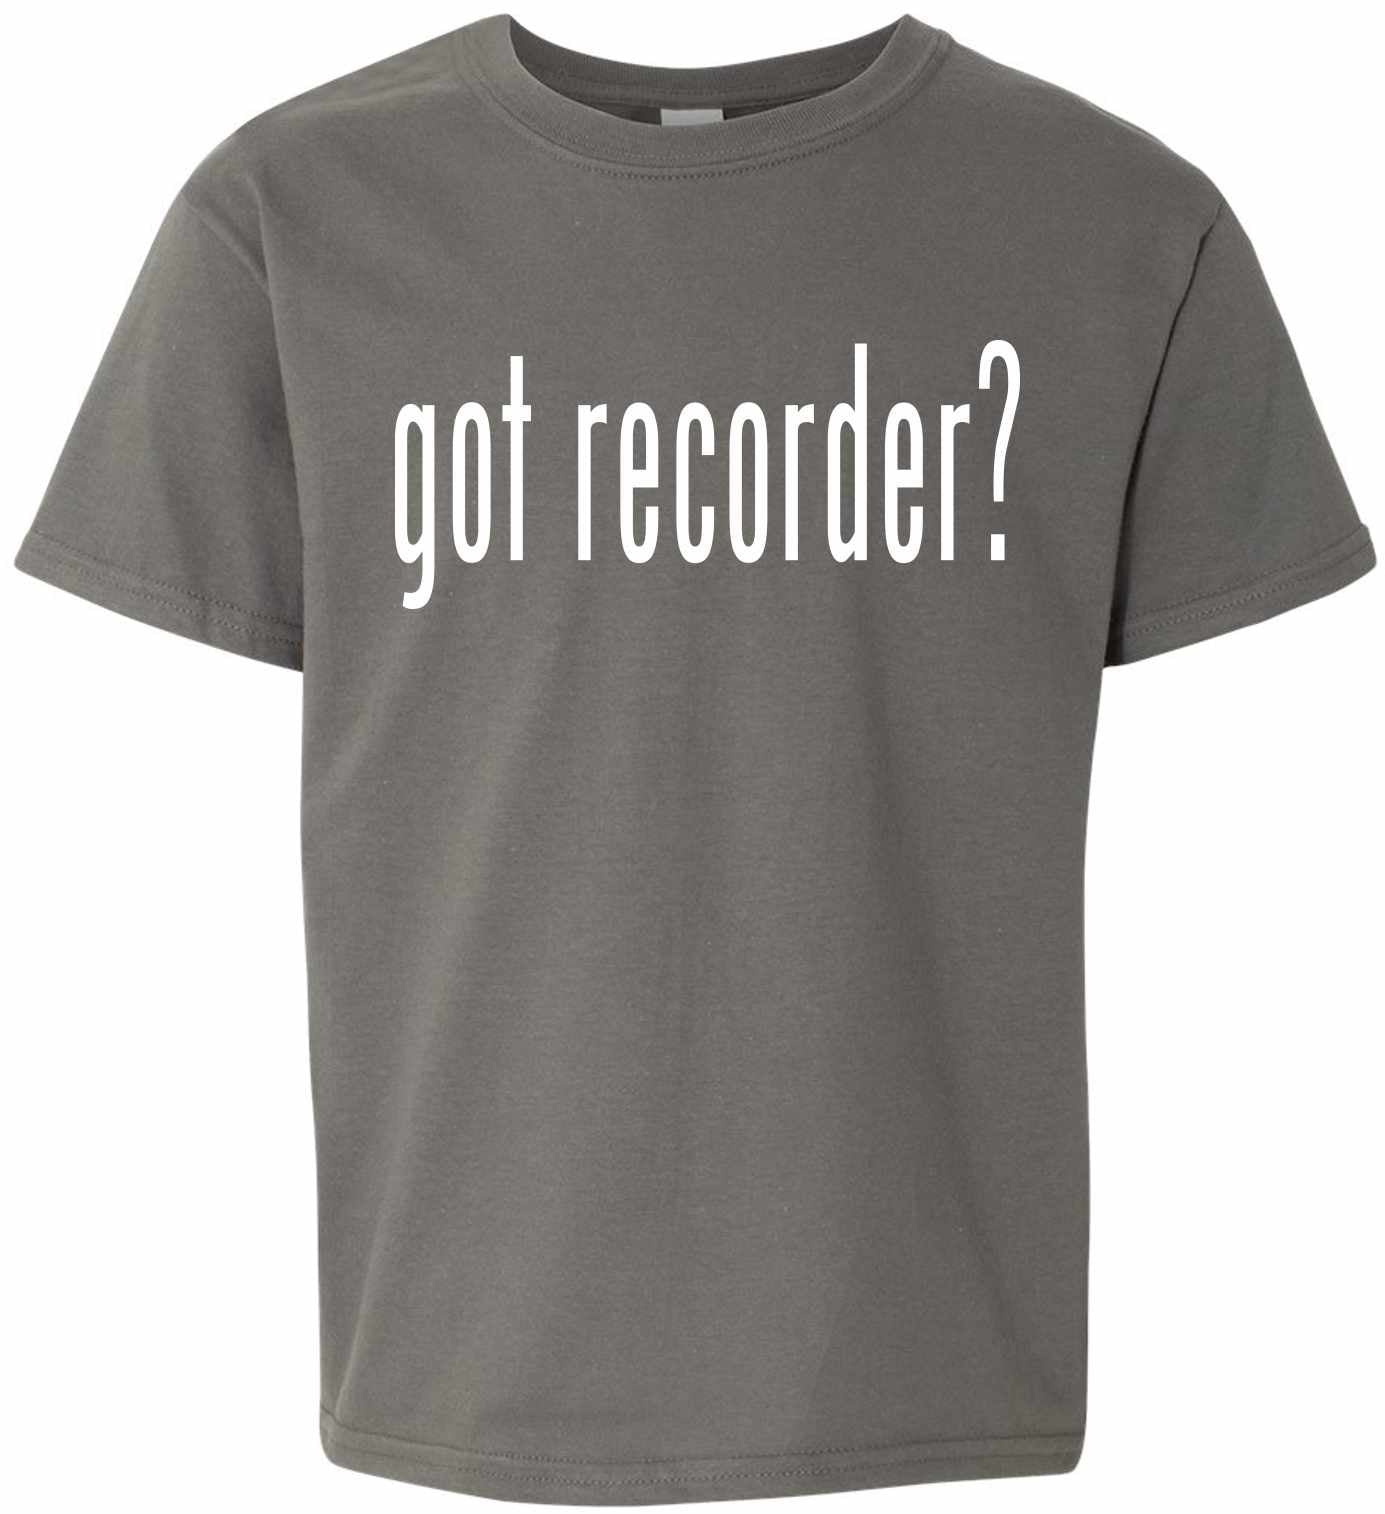 Got Recorder? on Kids T-Shirt (#895-201)